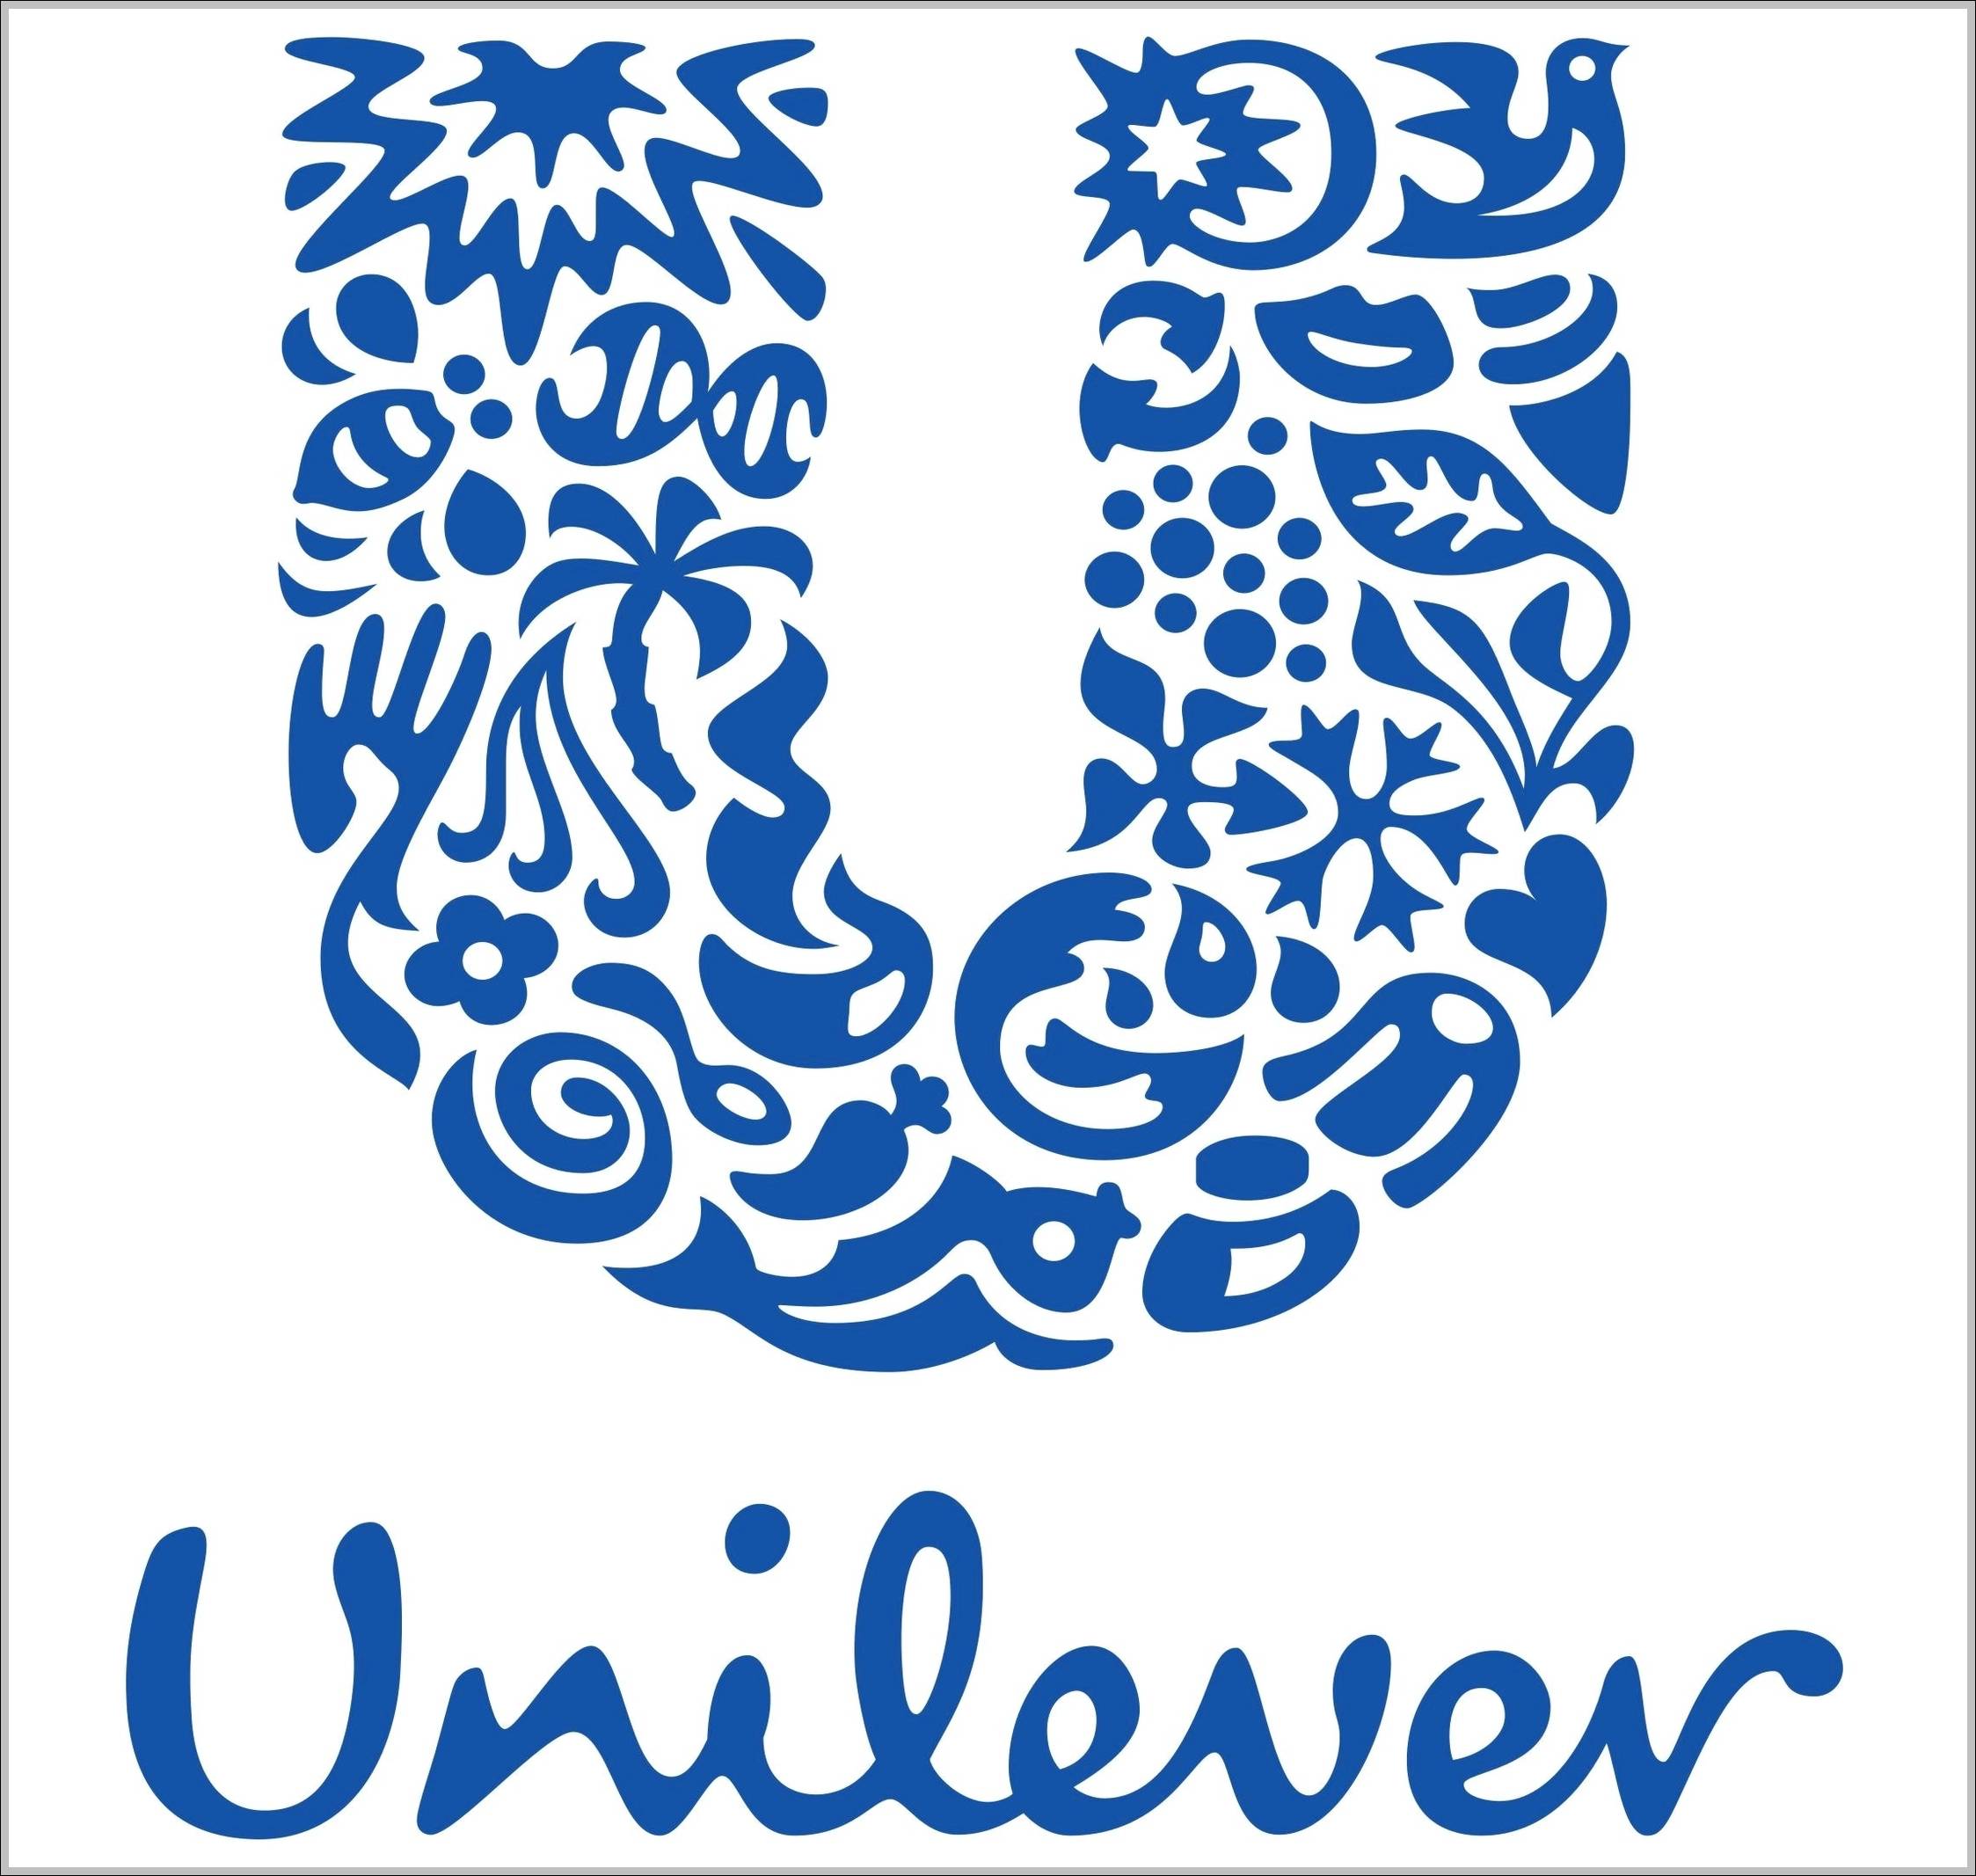 Unilever logo and name